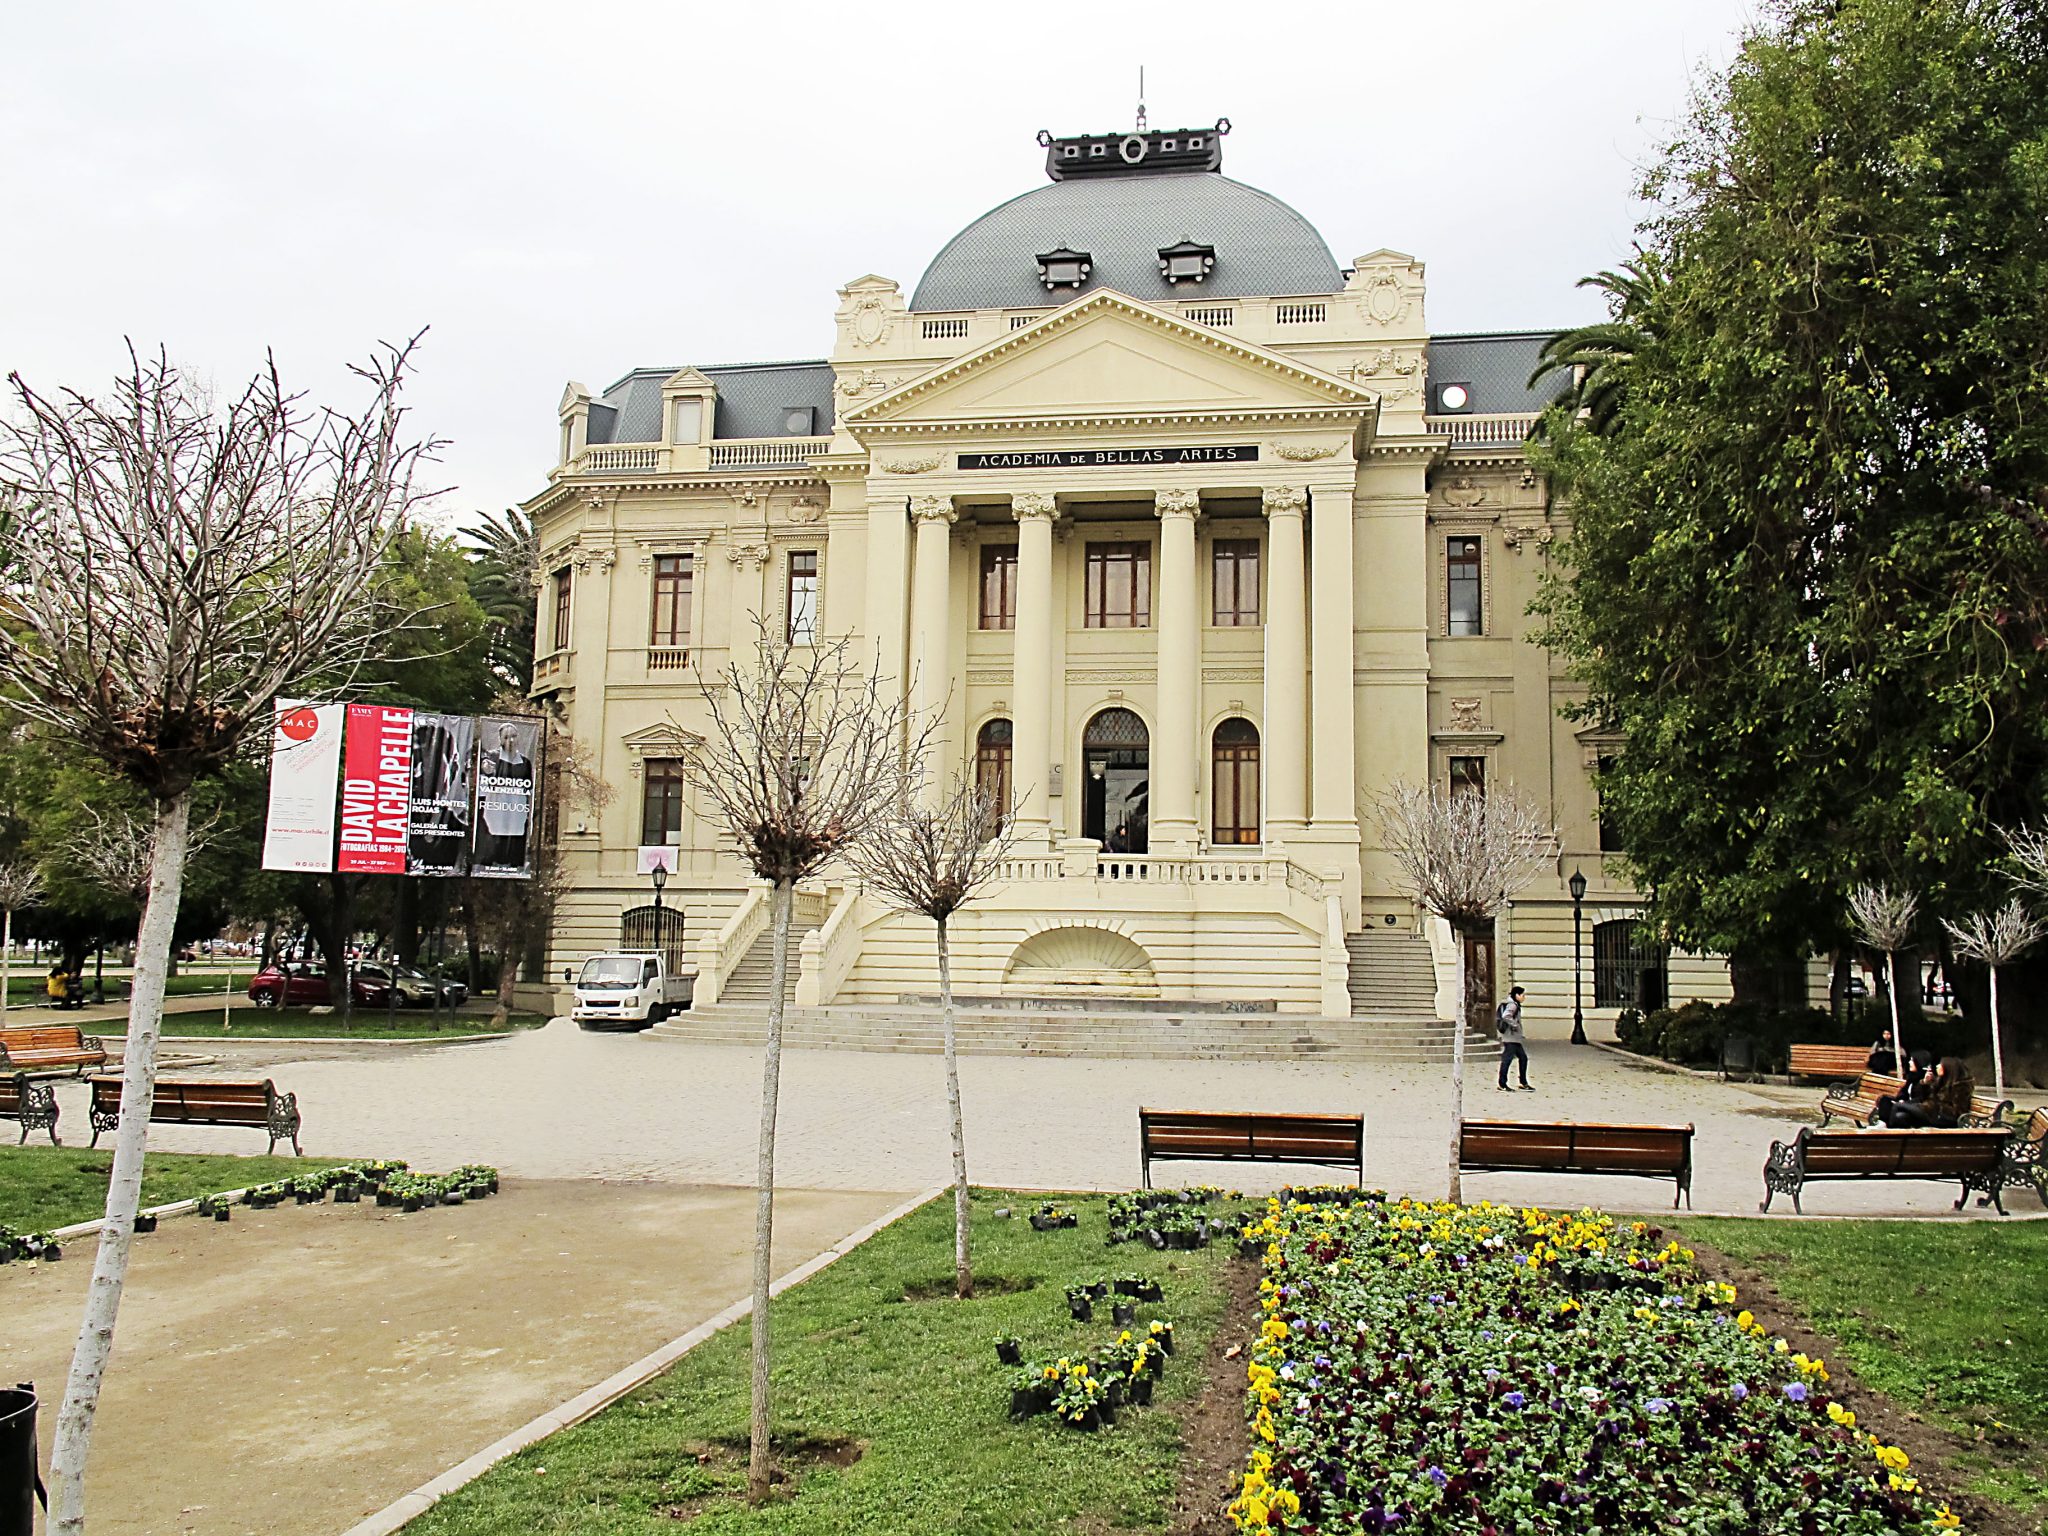 David LaChapelle | MUSEO DE ARTE CONTEMPORÁNEO, Santiago, Chile, July 20 - September 27, 2015 | 1